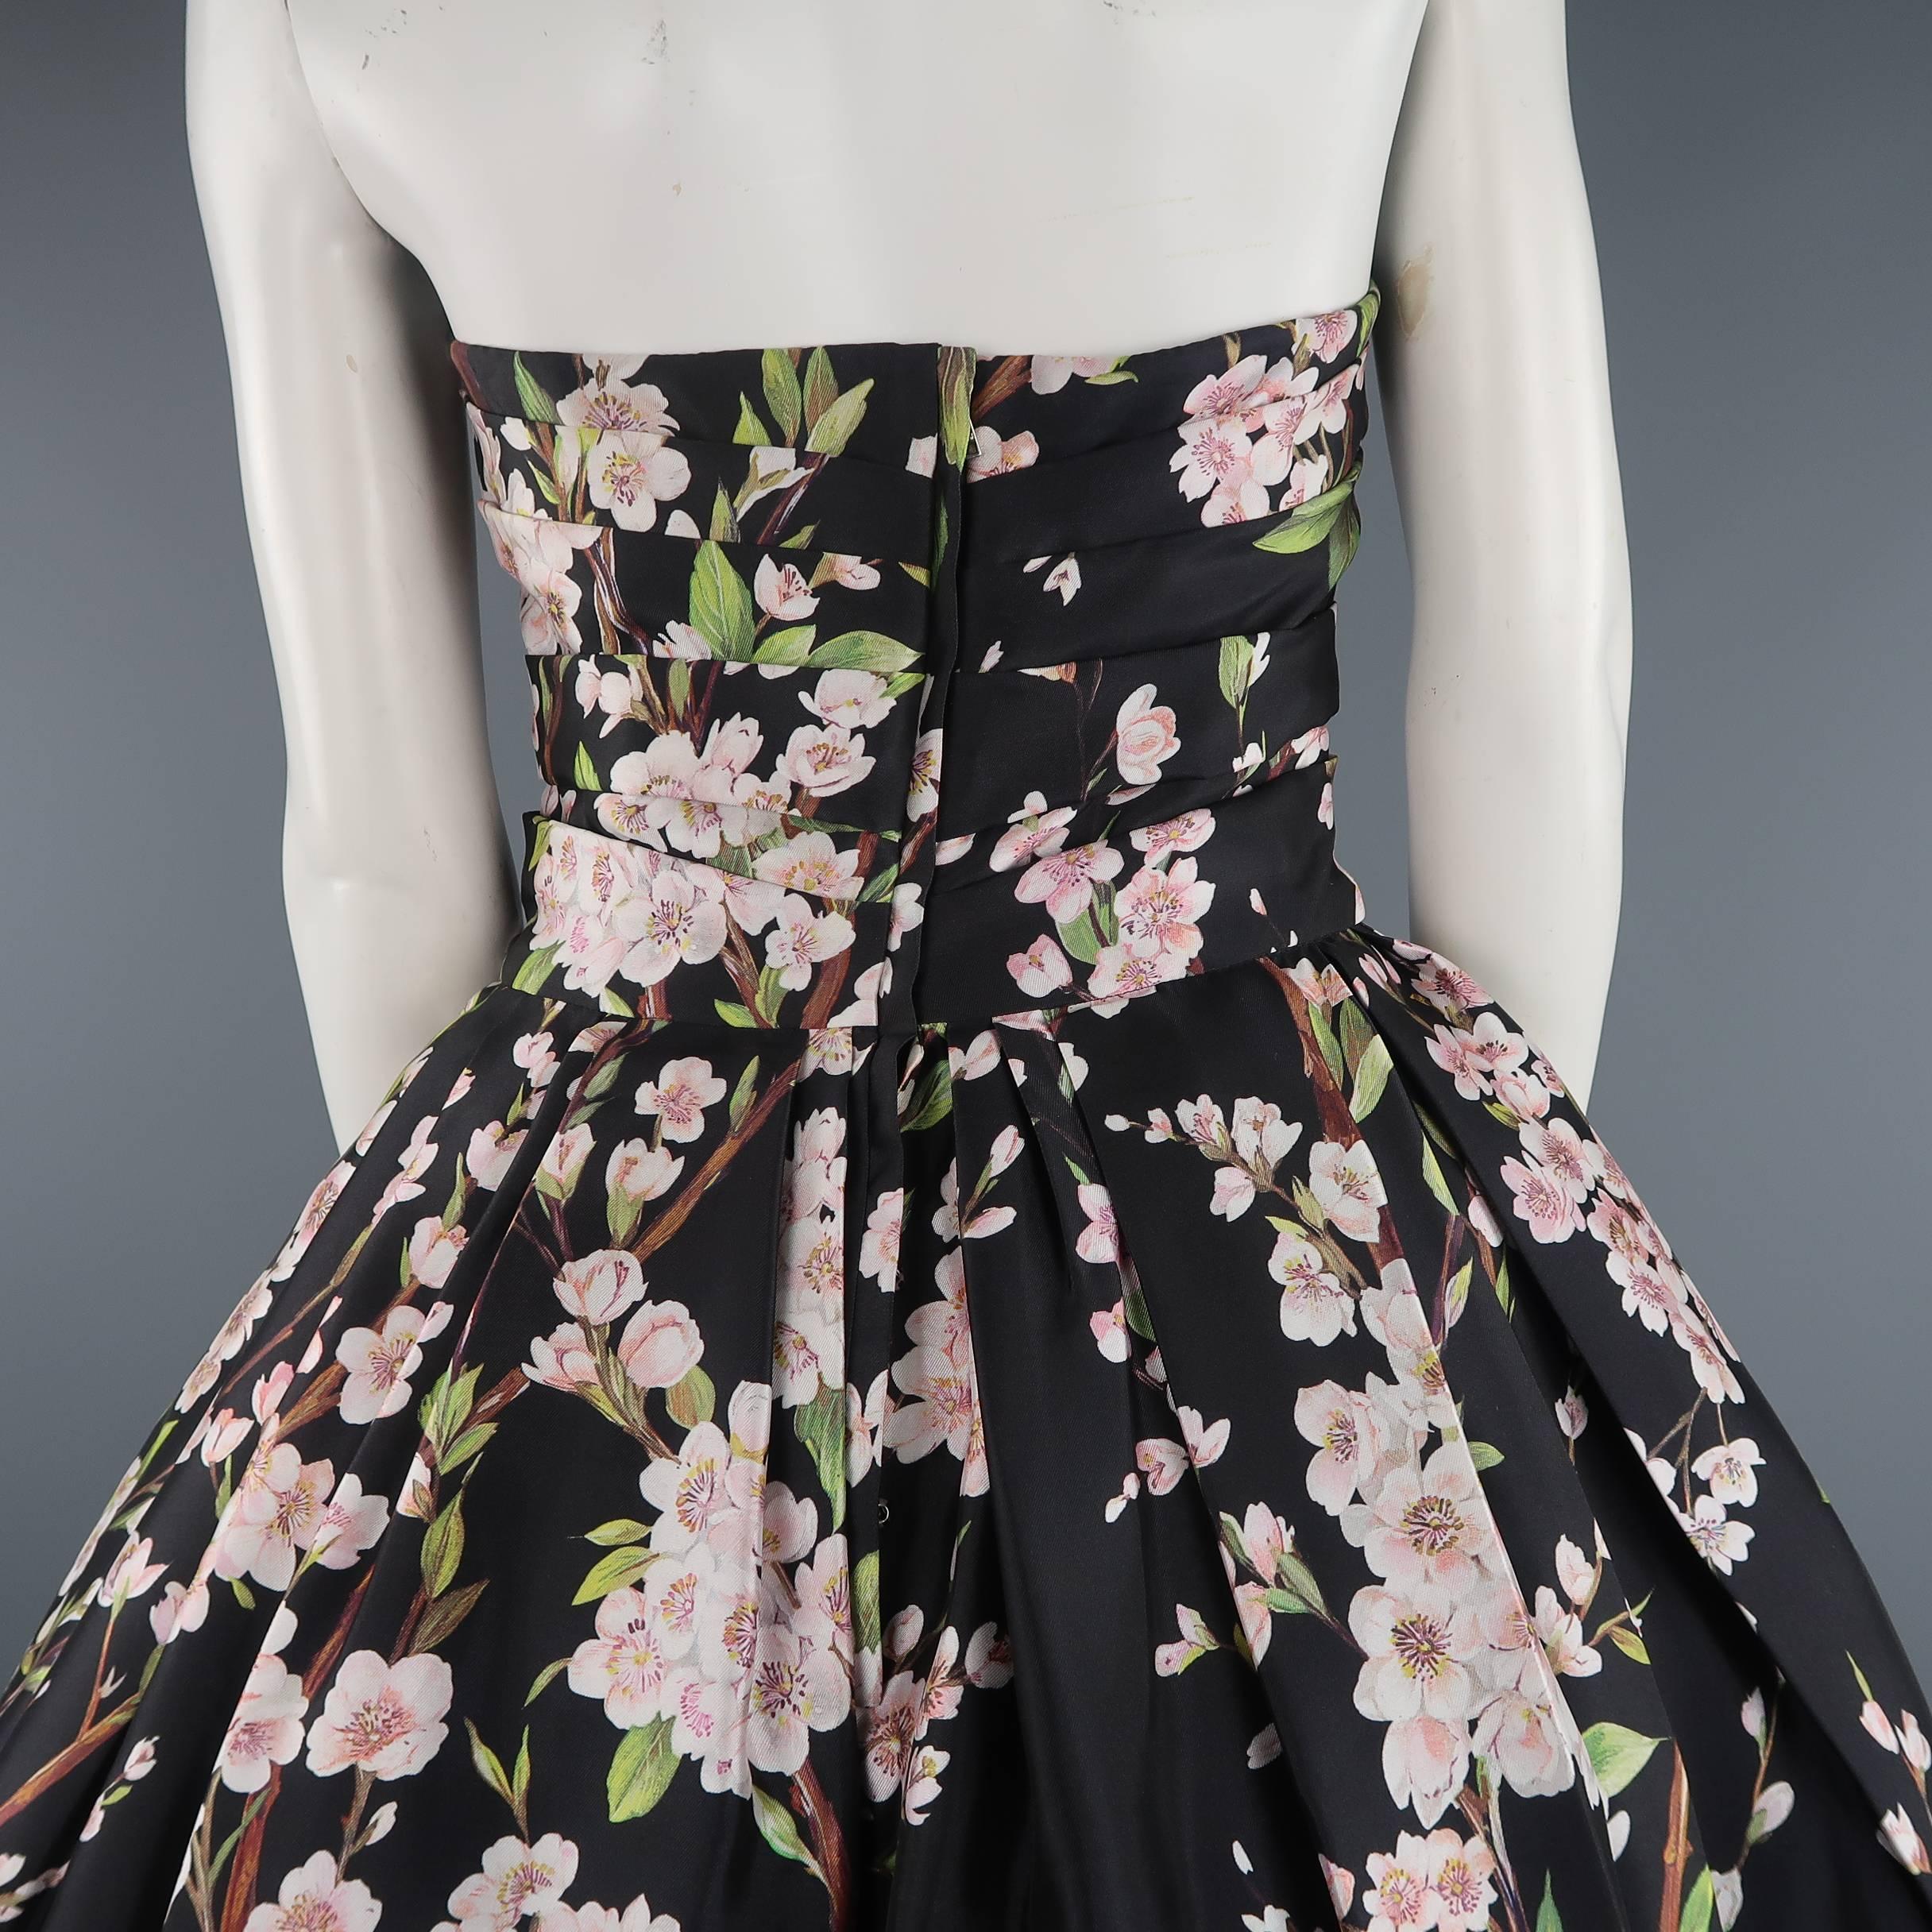 Dolce & Gabbana Dress -  Black Cherry Blossom Cocktail Dress Gown 1